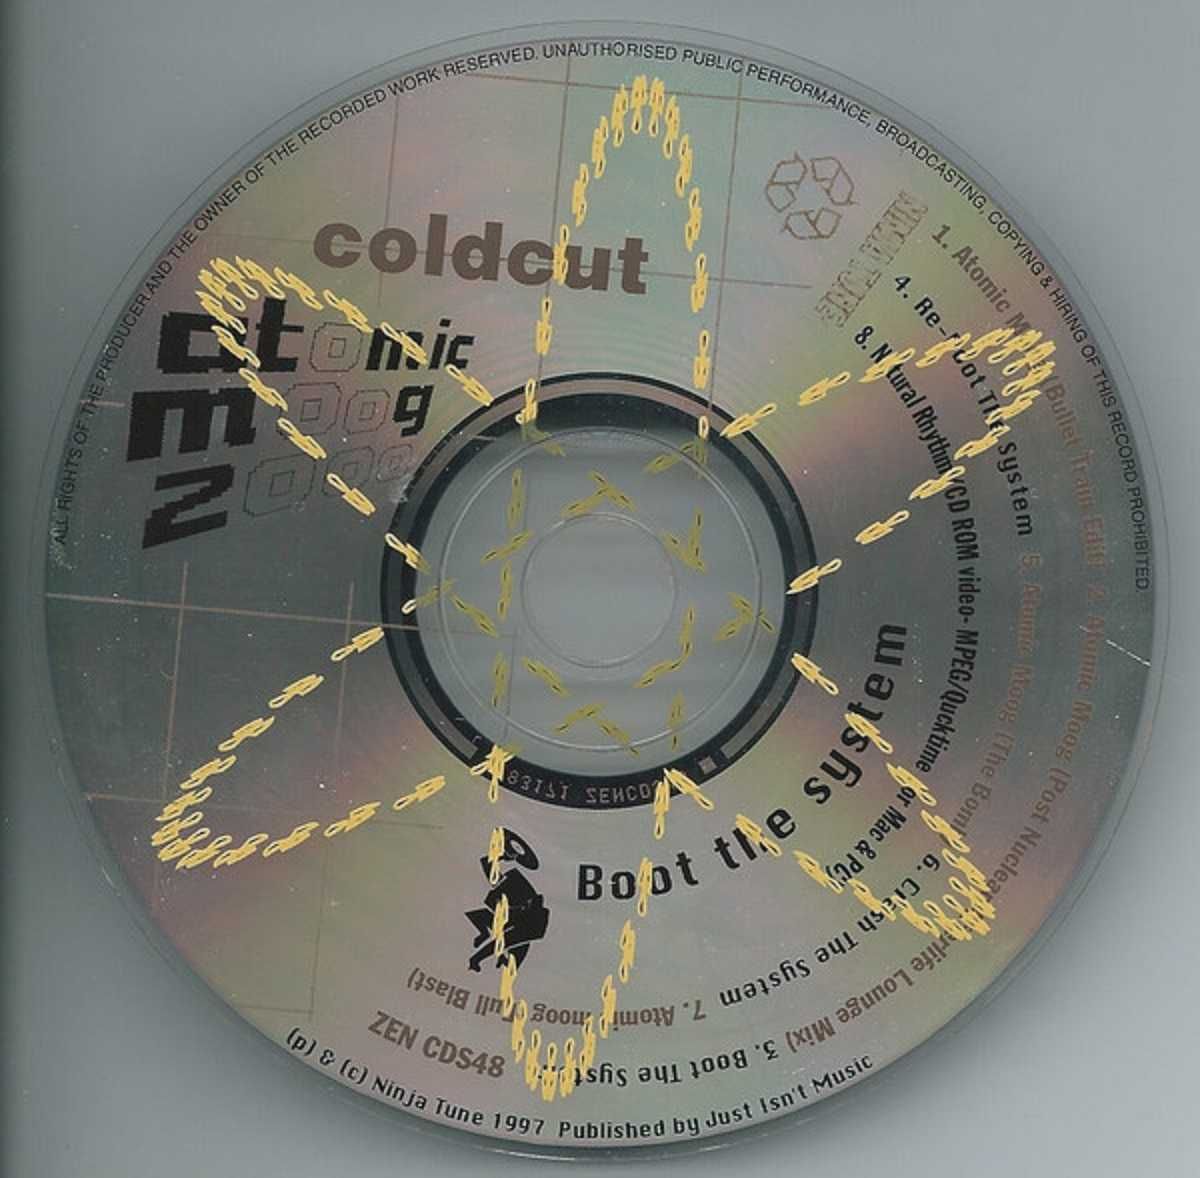 Coldcut – Atomic Moog [CD Maxi-Single Ninja Tune 1997]